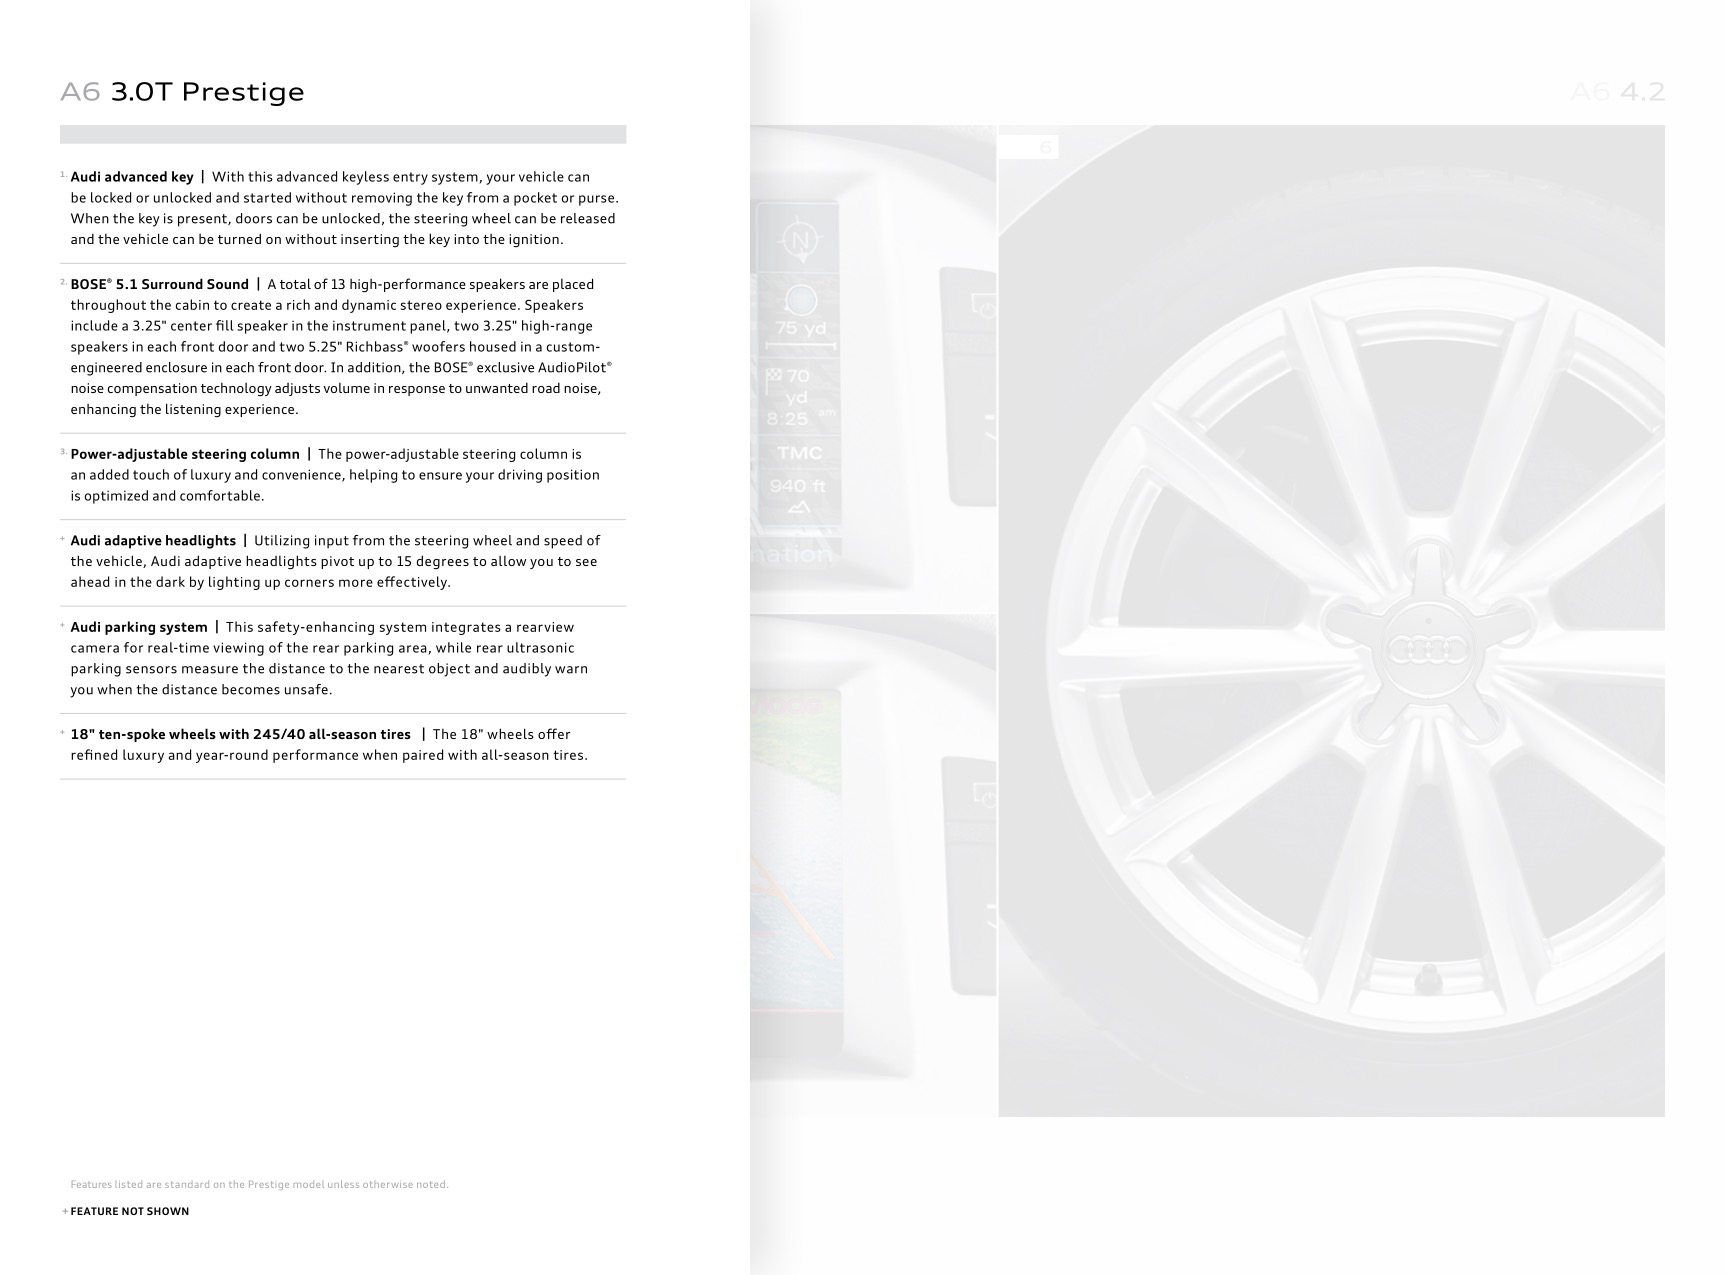 2011 Audi A6 Brochure Page 46